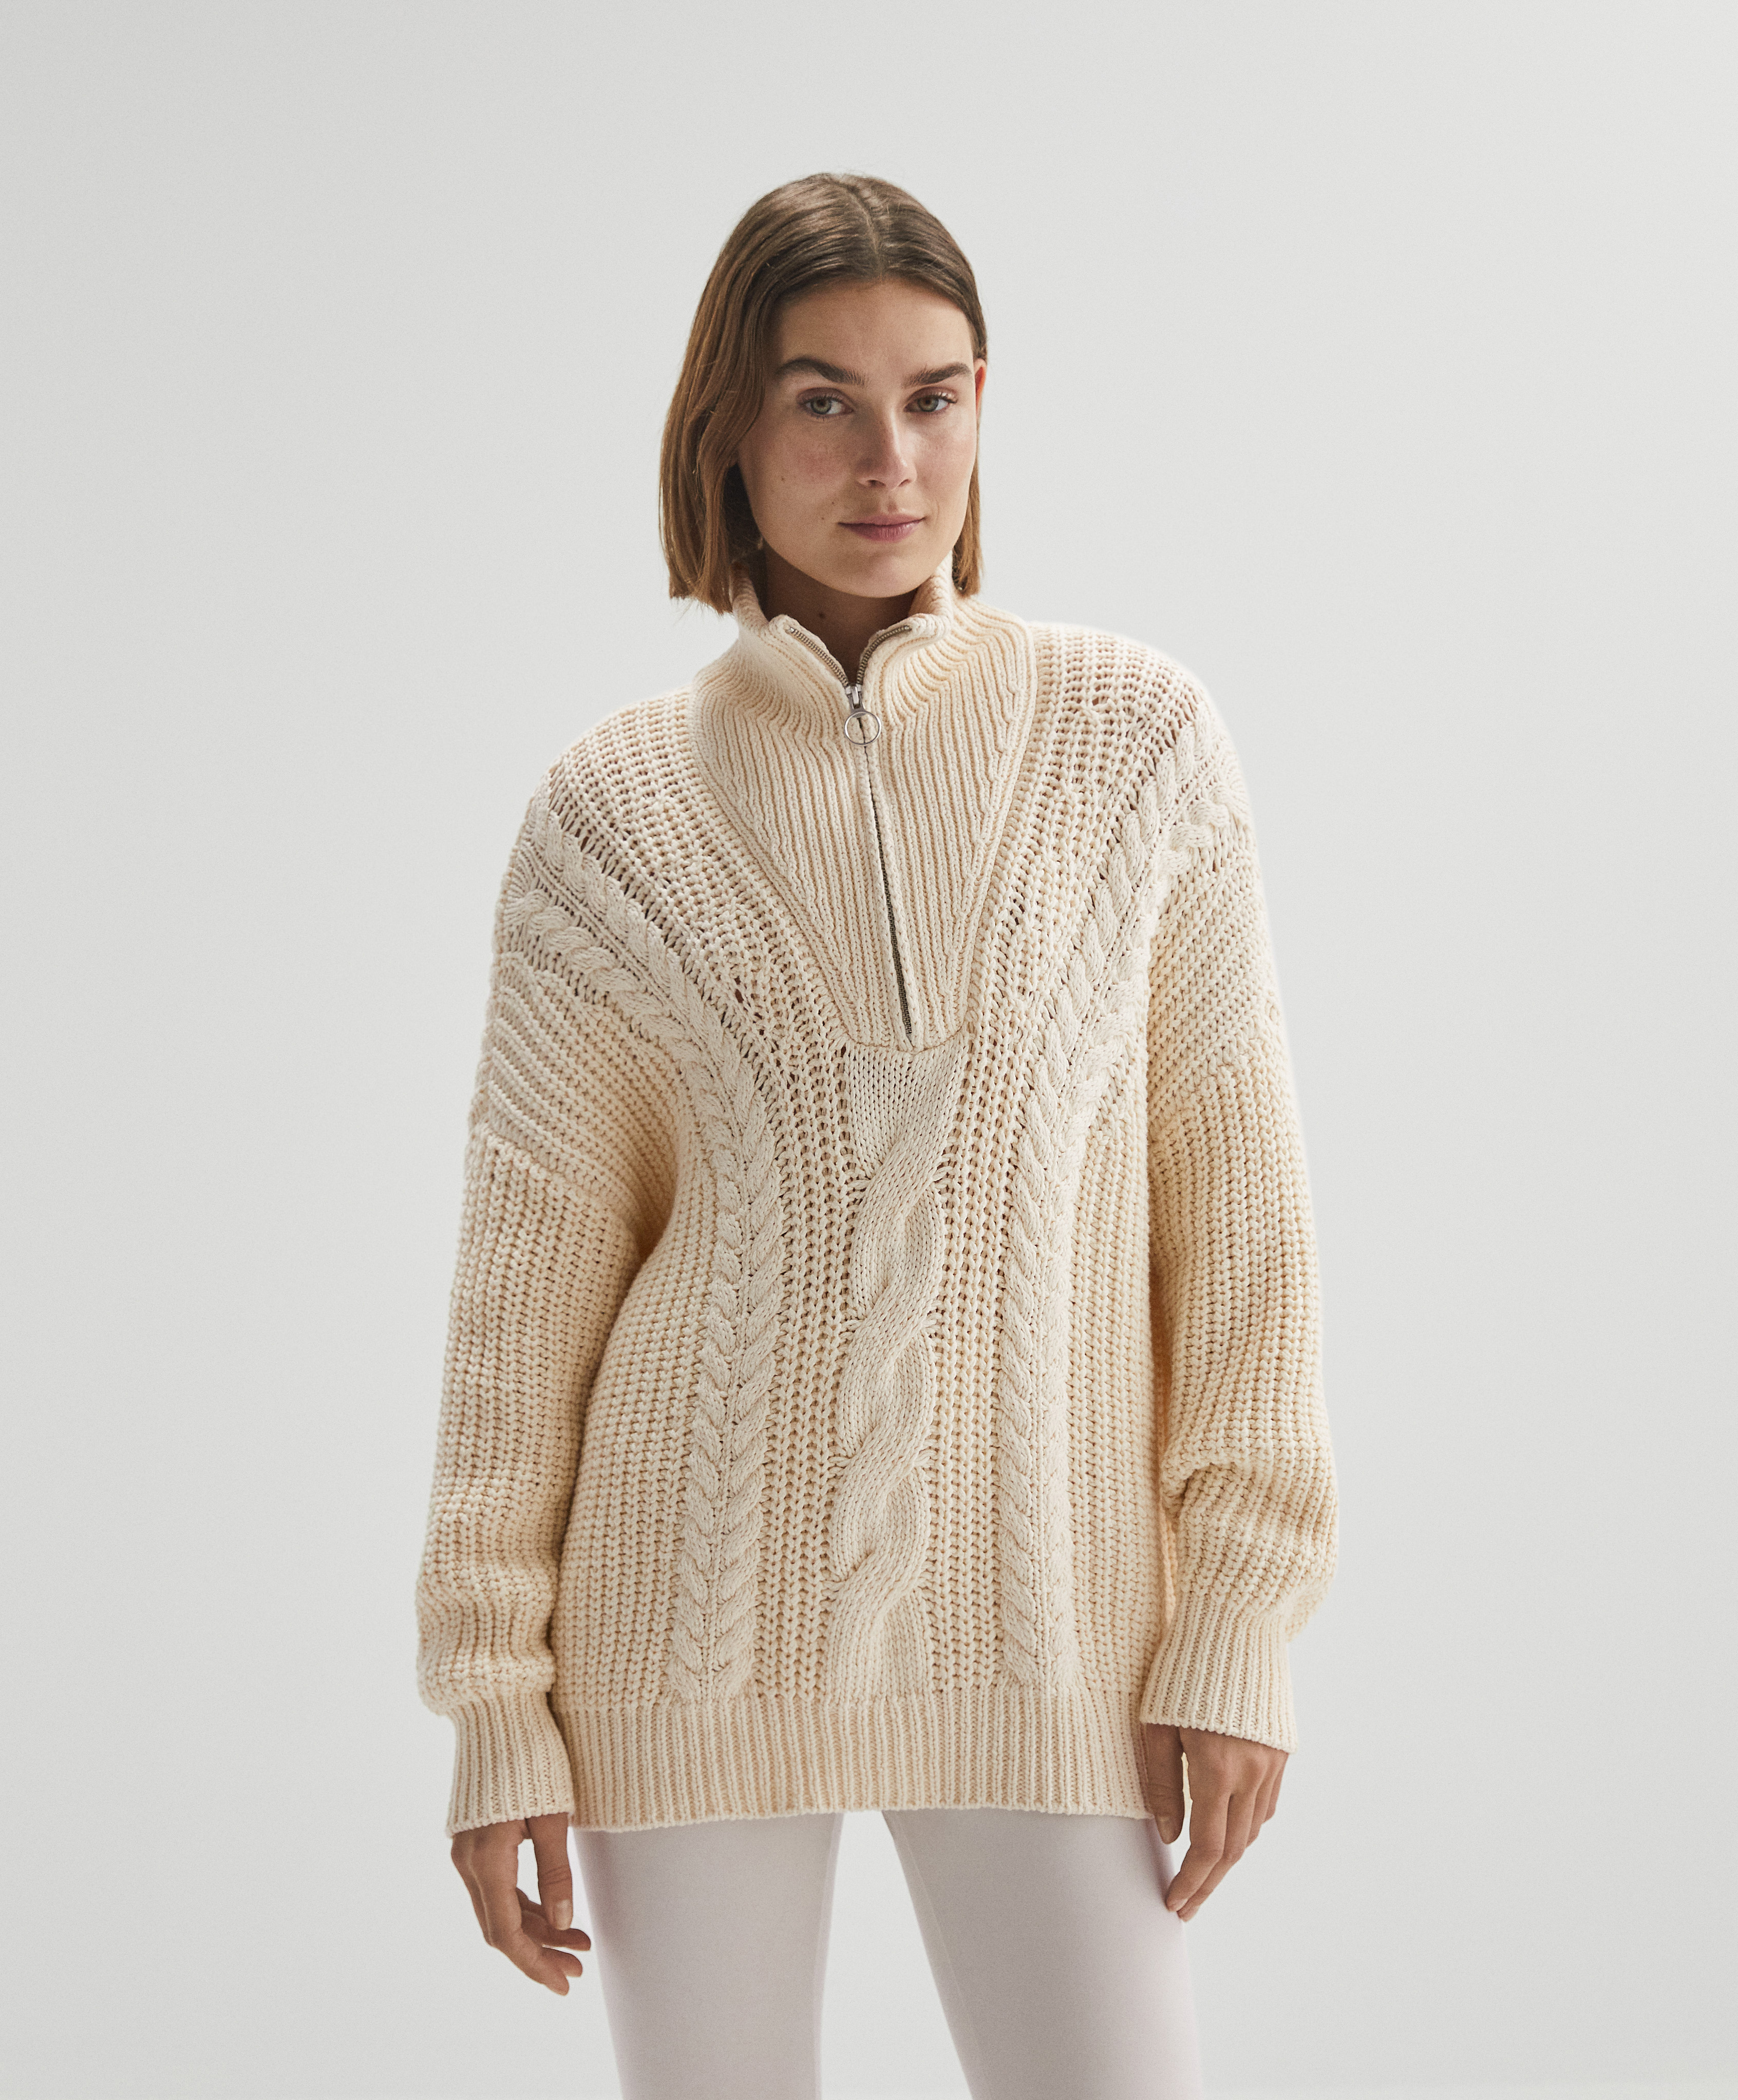 Zipped 100% cotton knit jumper